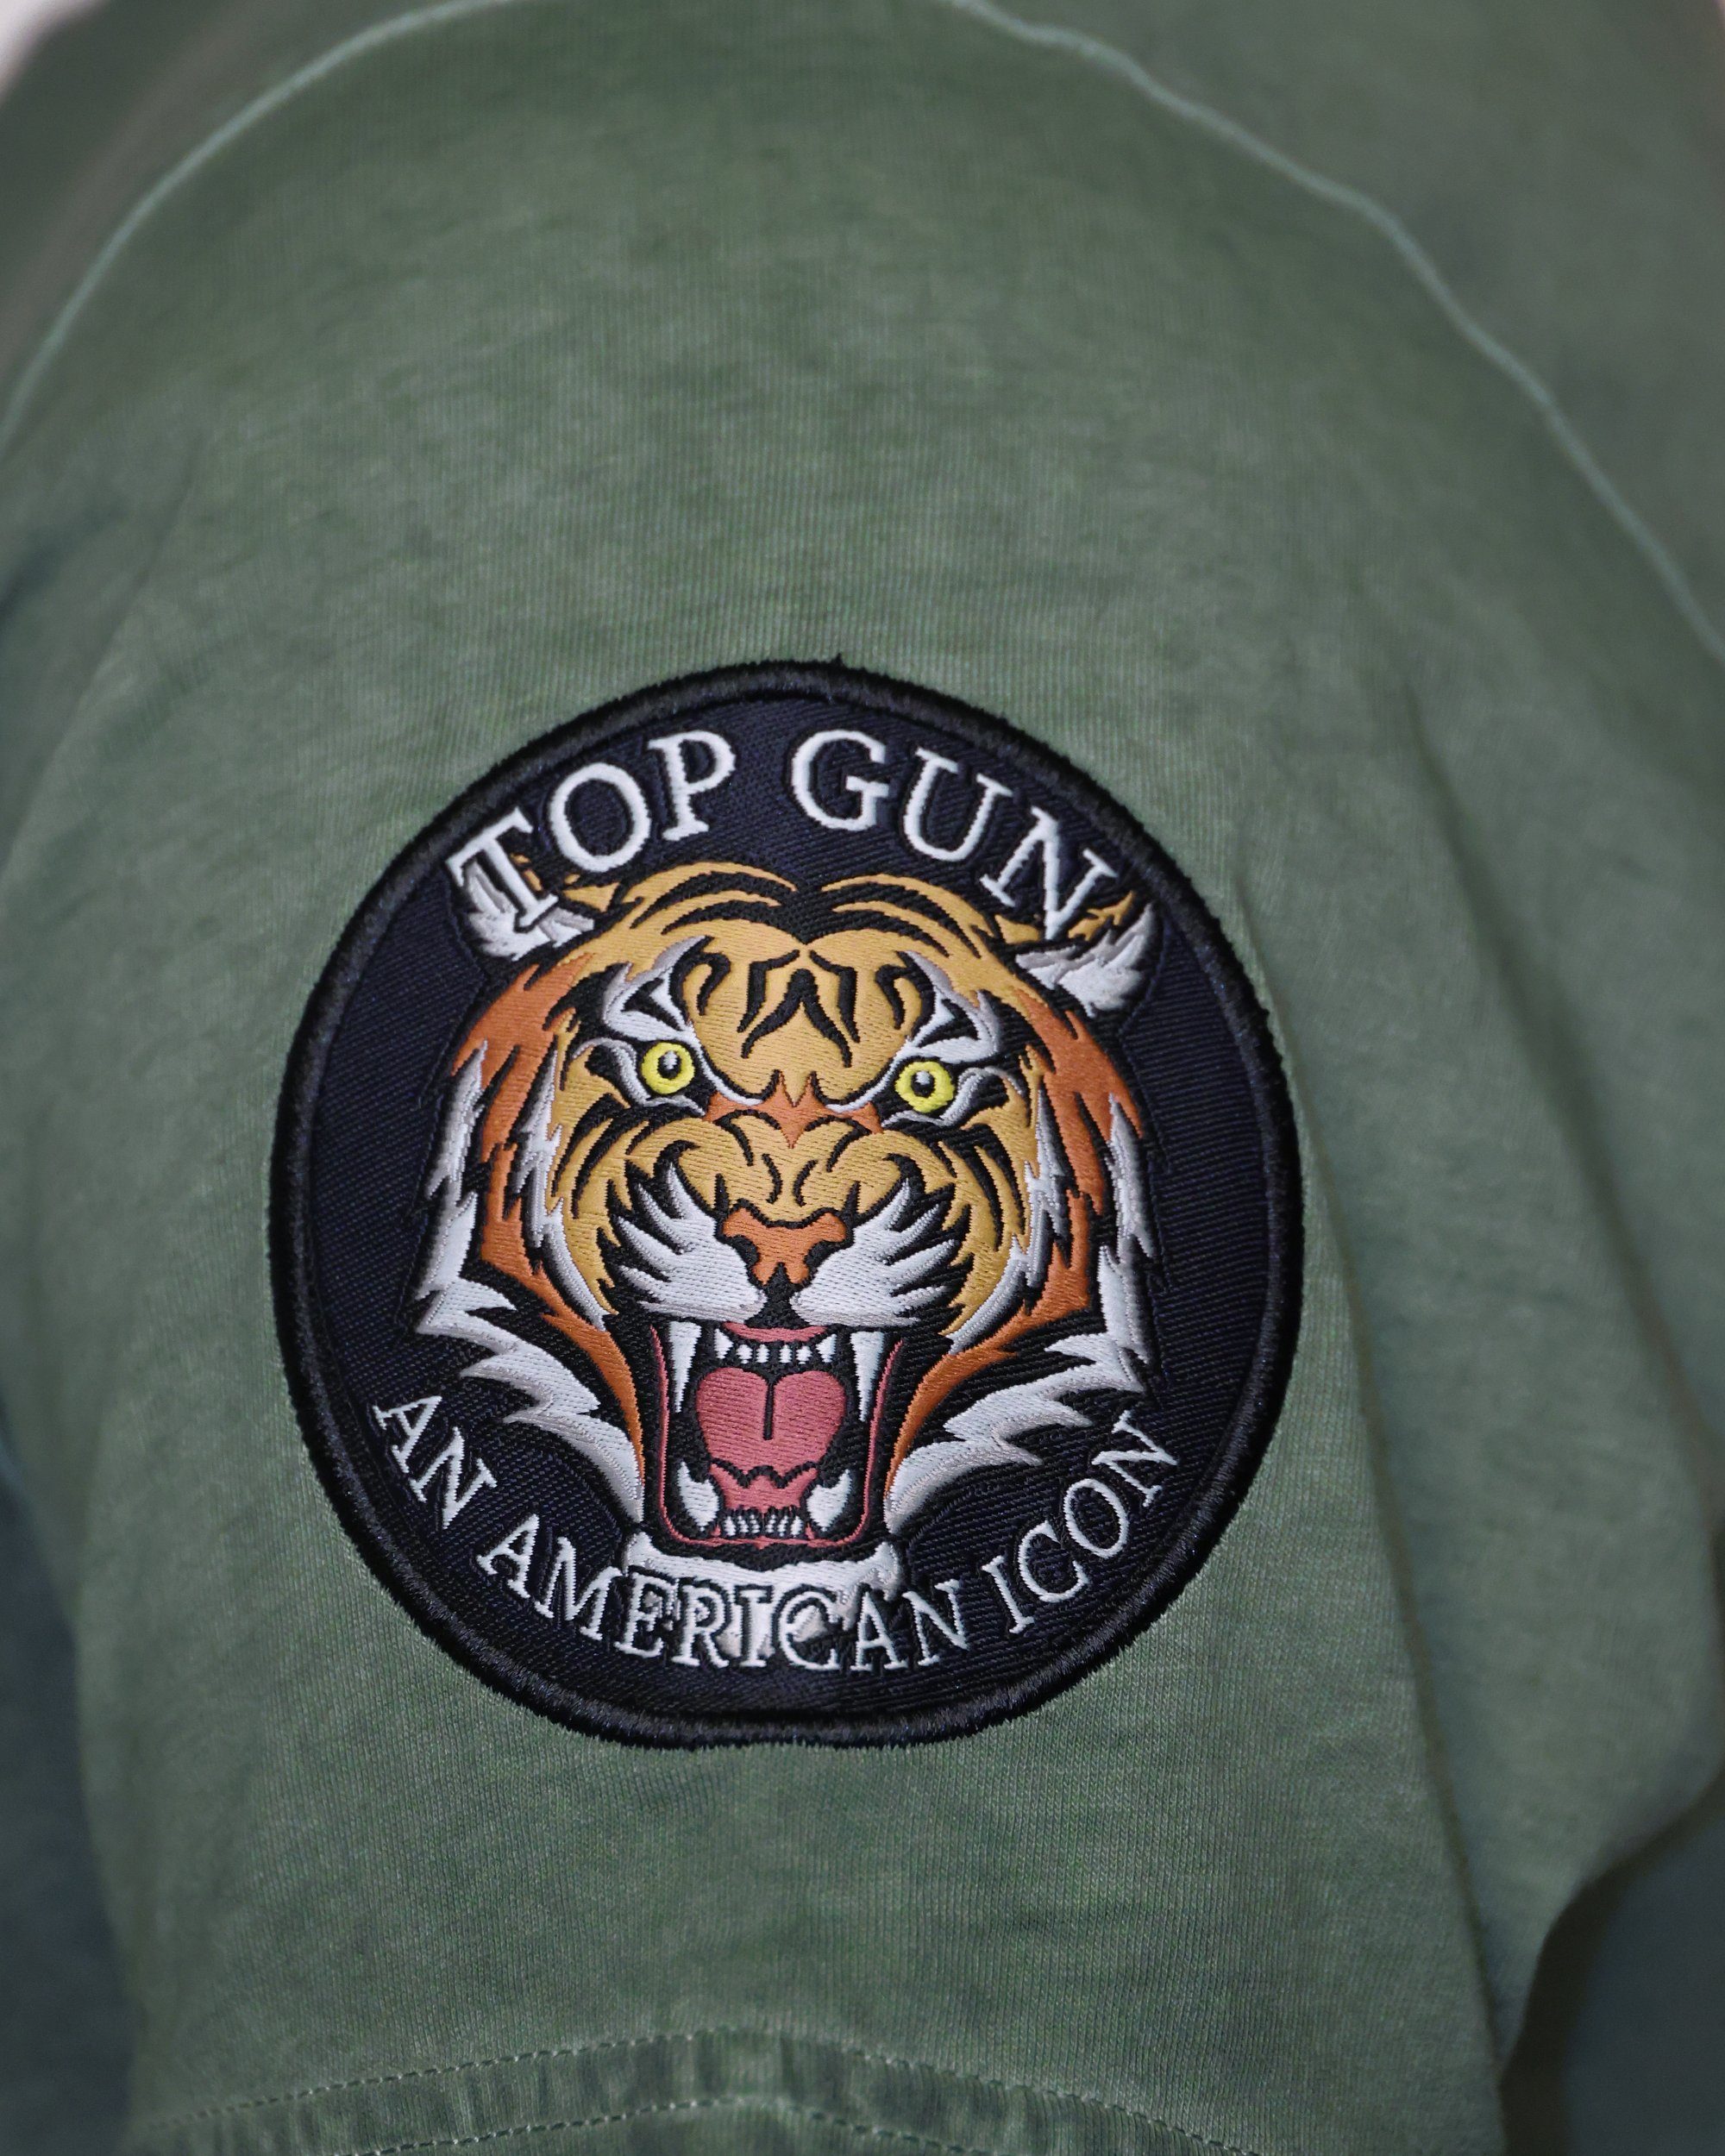 TG20213001 olive TOP T-Shirt GUN